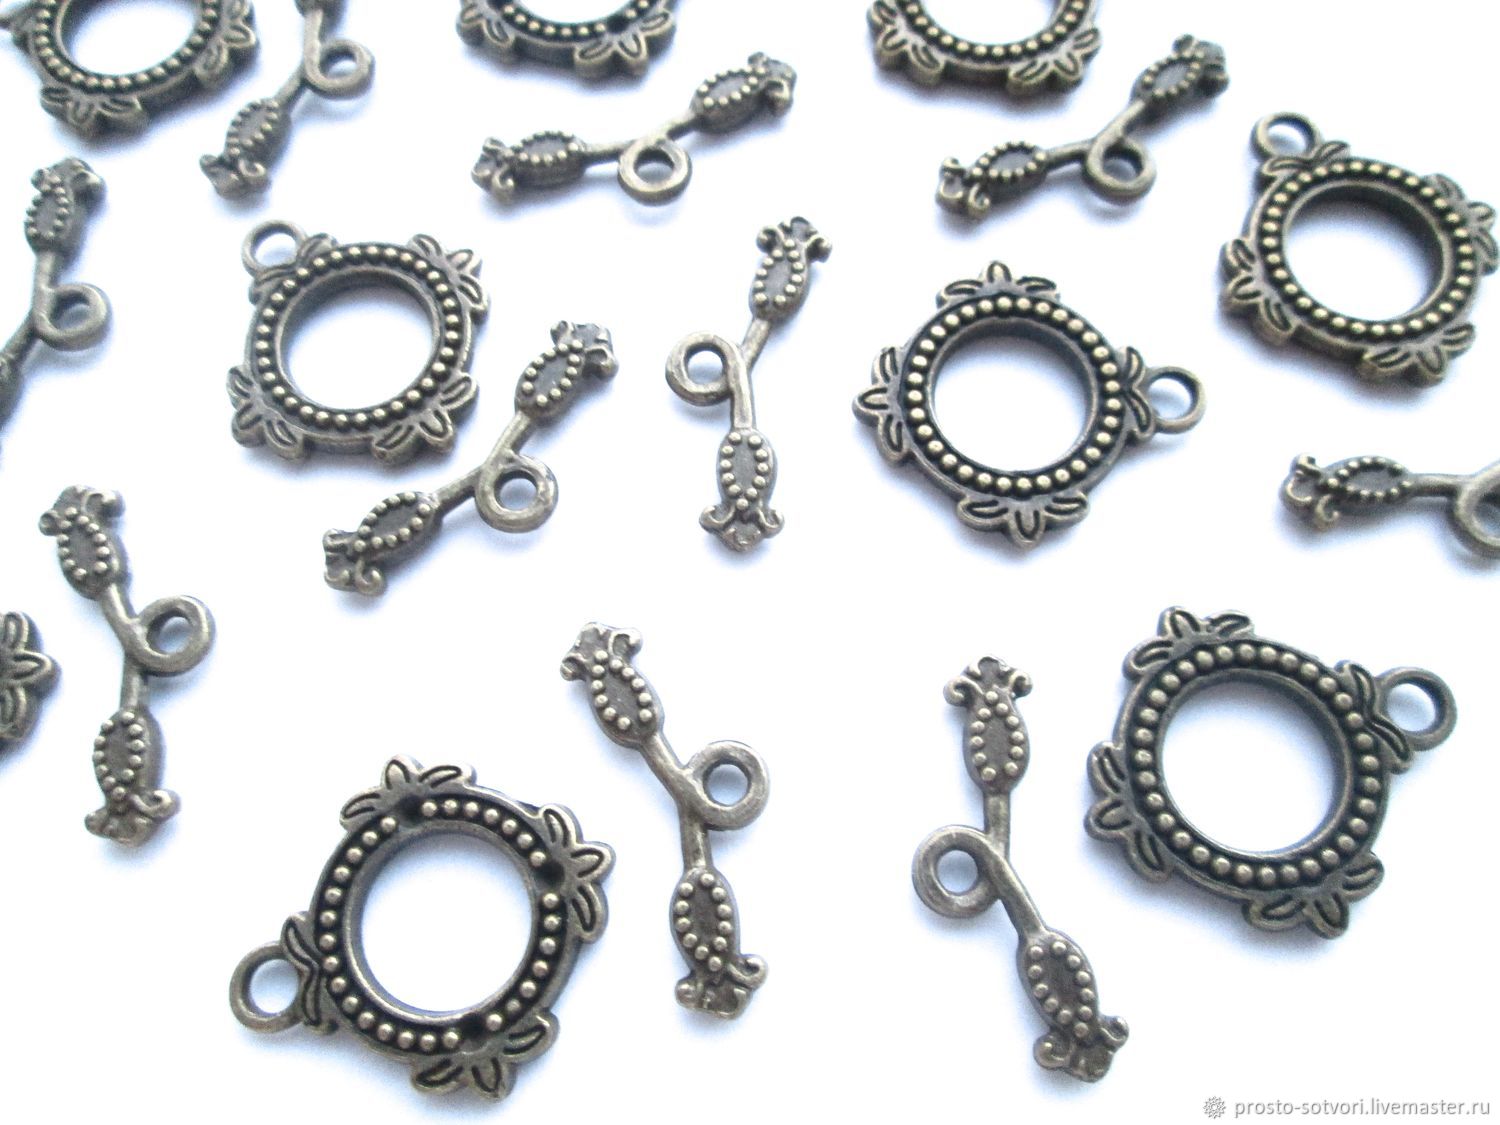 Lock-togl antique bronze, accessories for jewelry 28951261, Accessories for jewelry, Ekaterinburg,  Фото №1